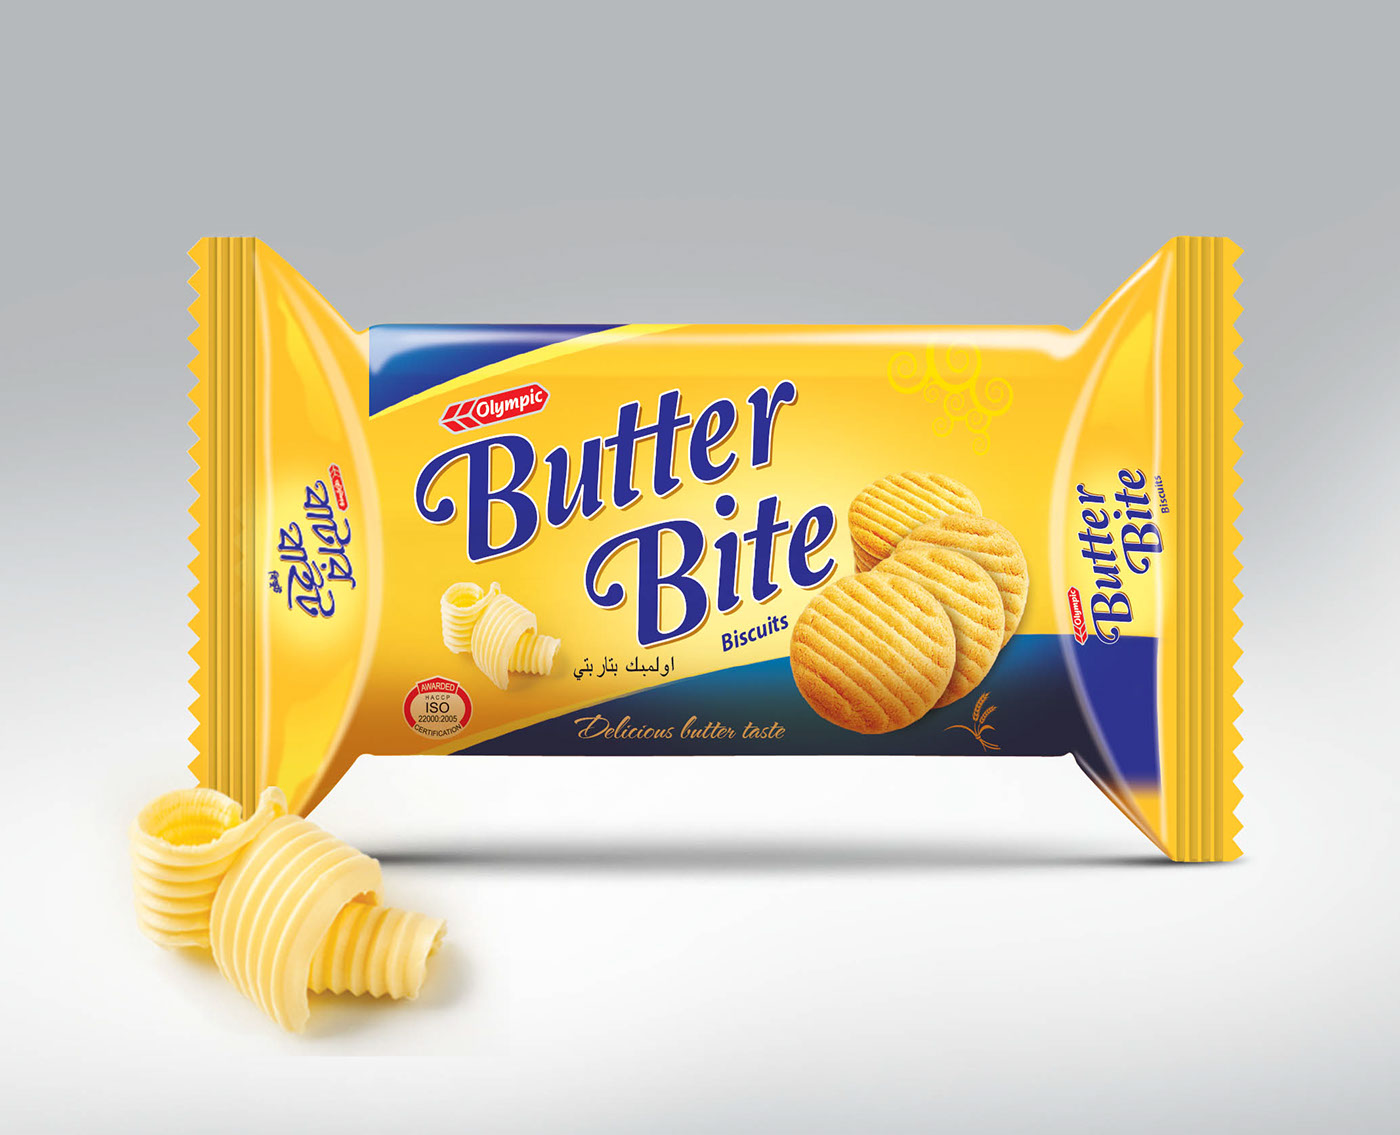 Butter roll cookie. Печенье в упаковке. Дизайн упаковки печенья. Печенье Butter. Bite печенье упаковка.